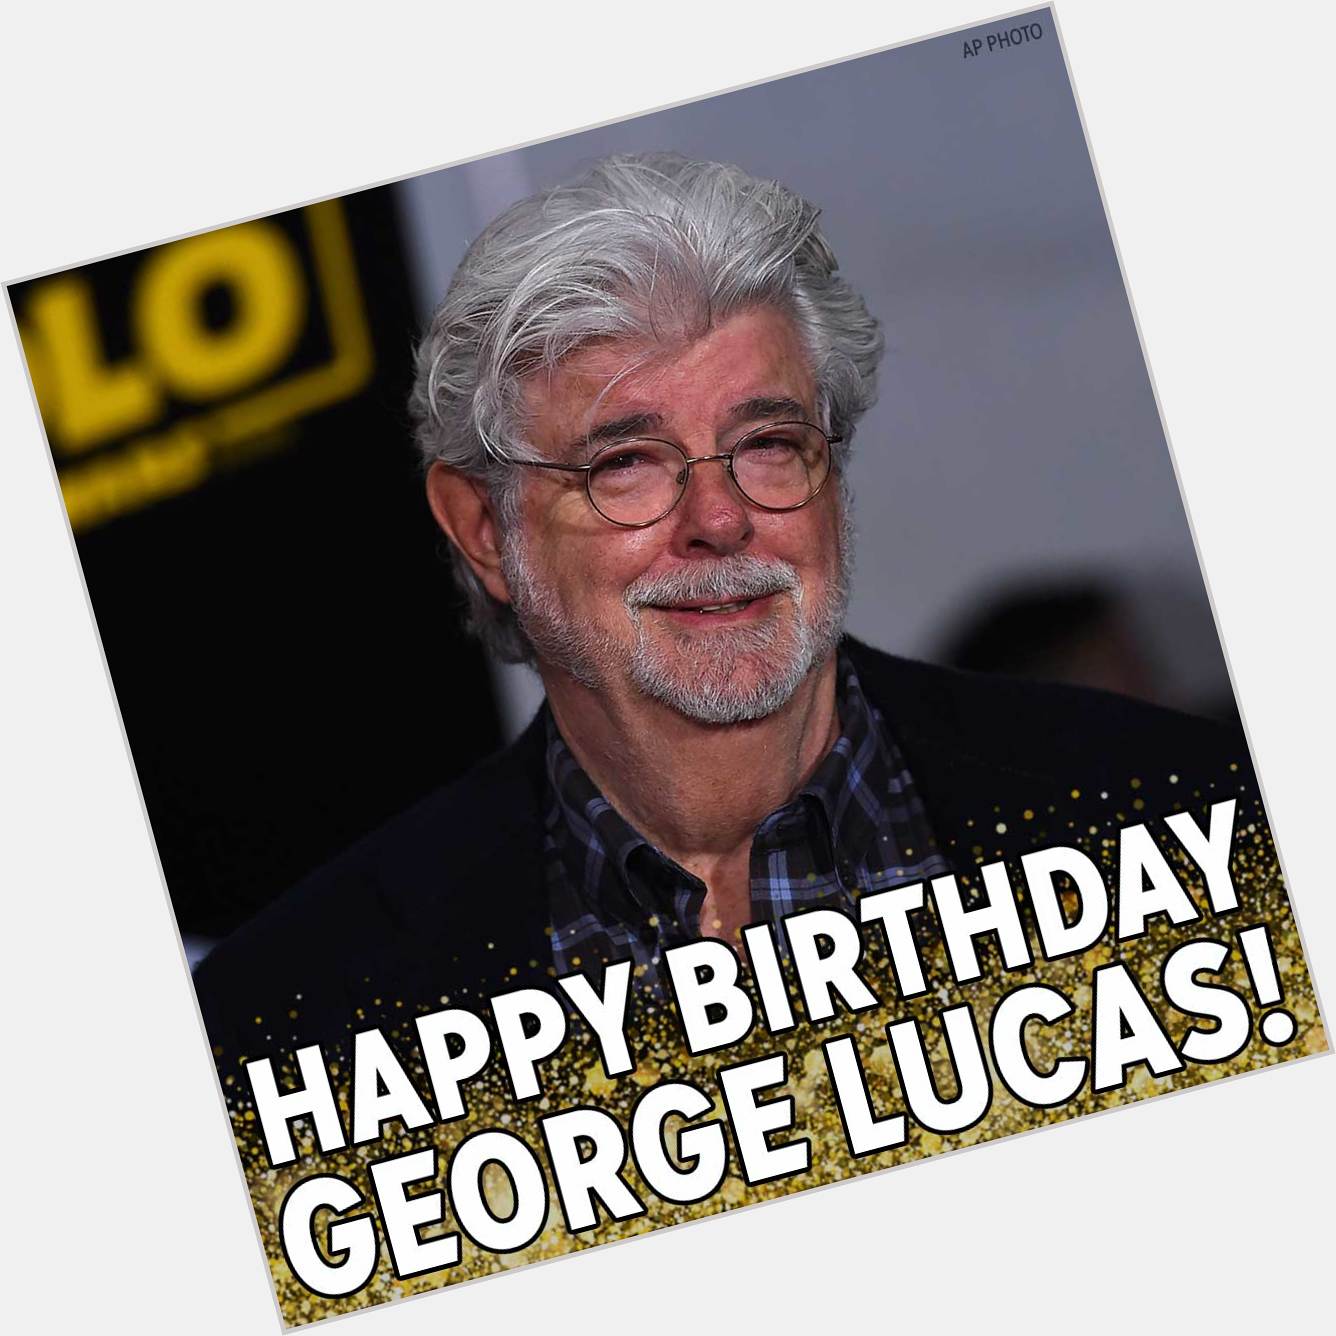  Star Wars creator George Lucas turns 75 today. Happy Birthday! 